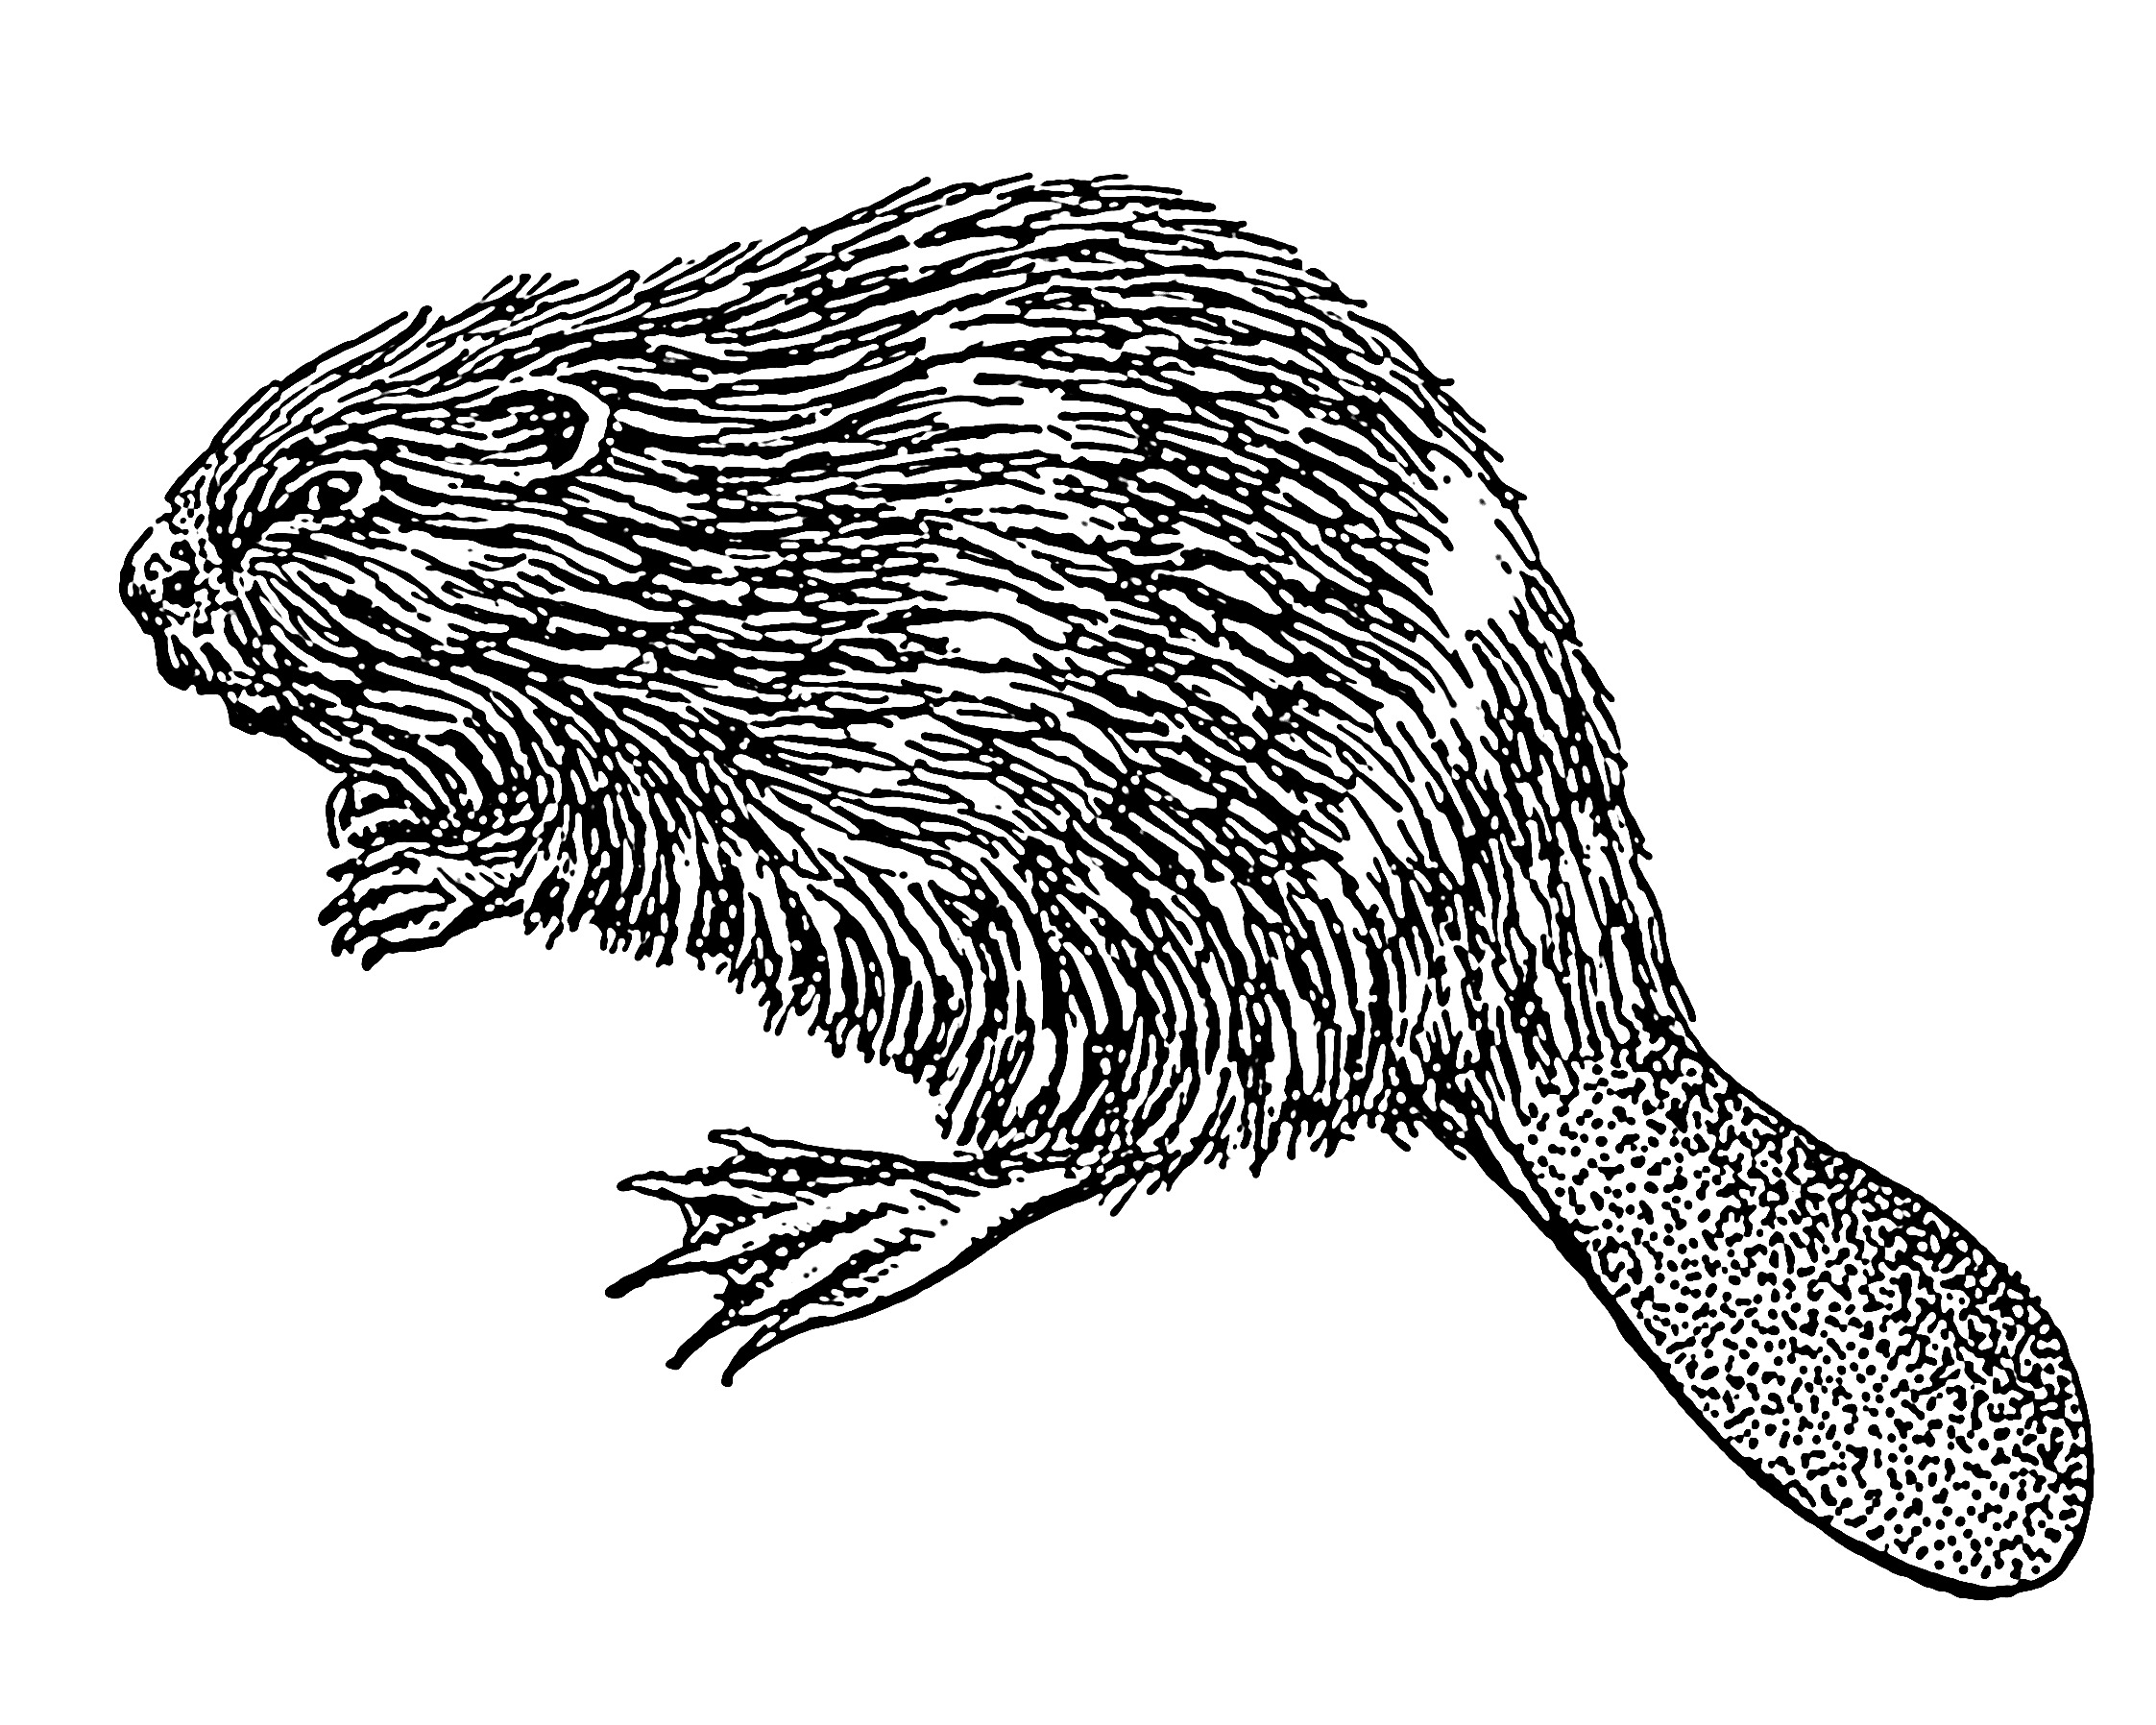 Beaver Illustration icons